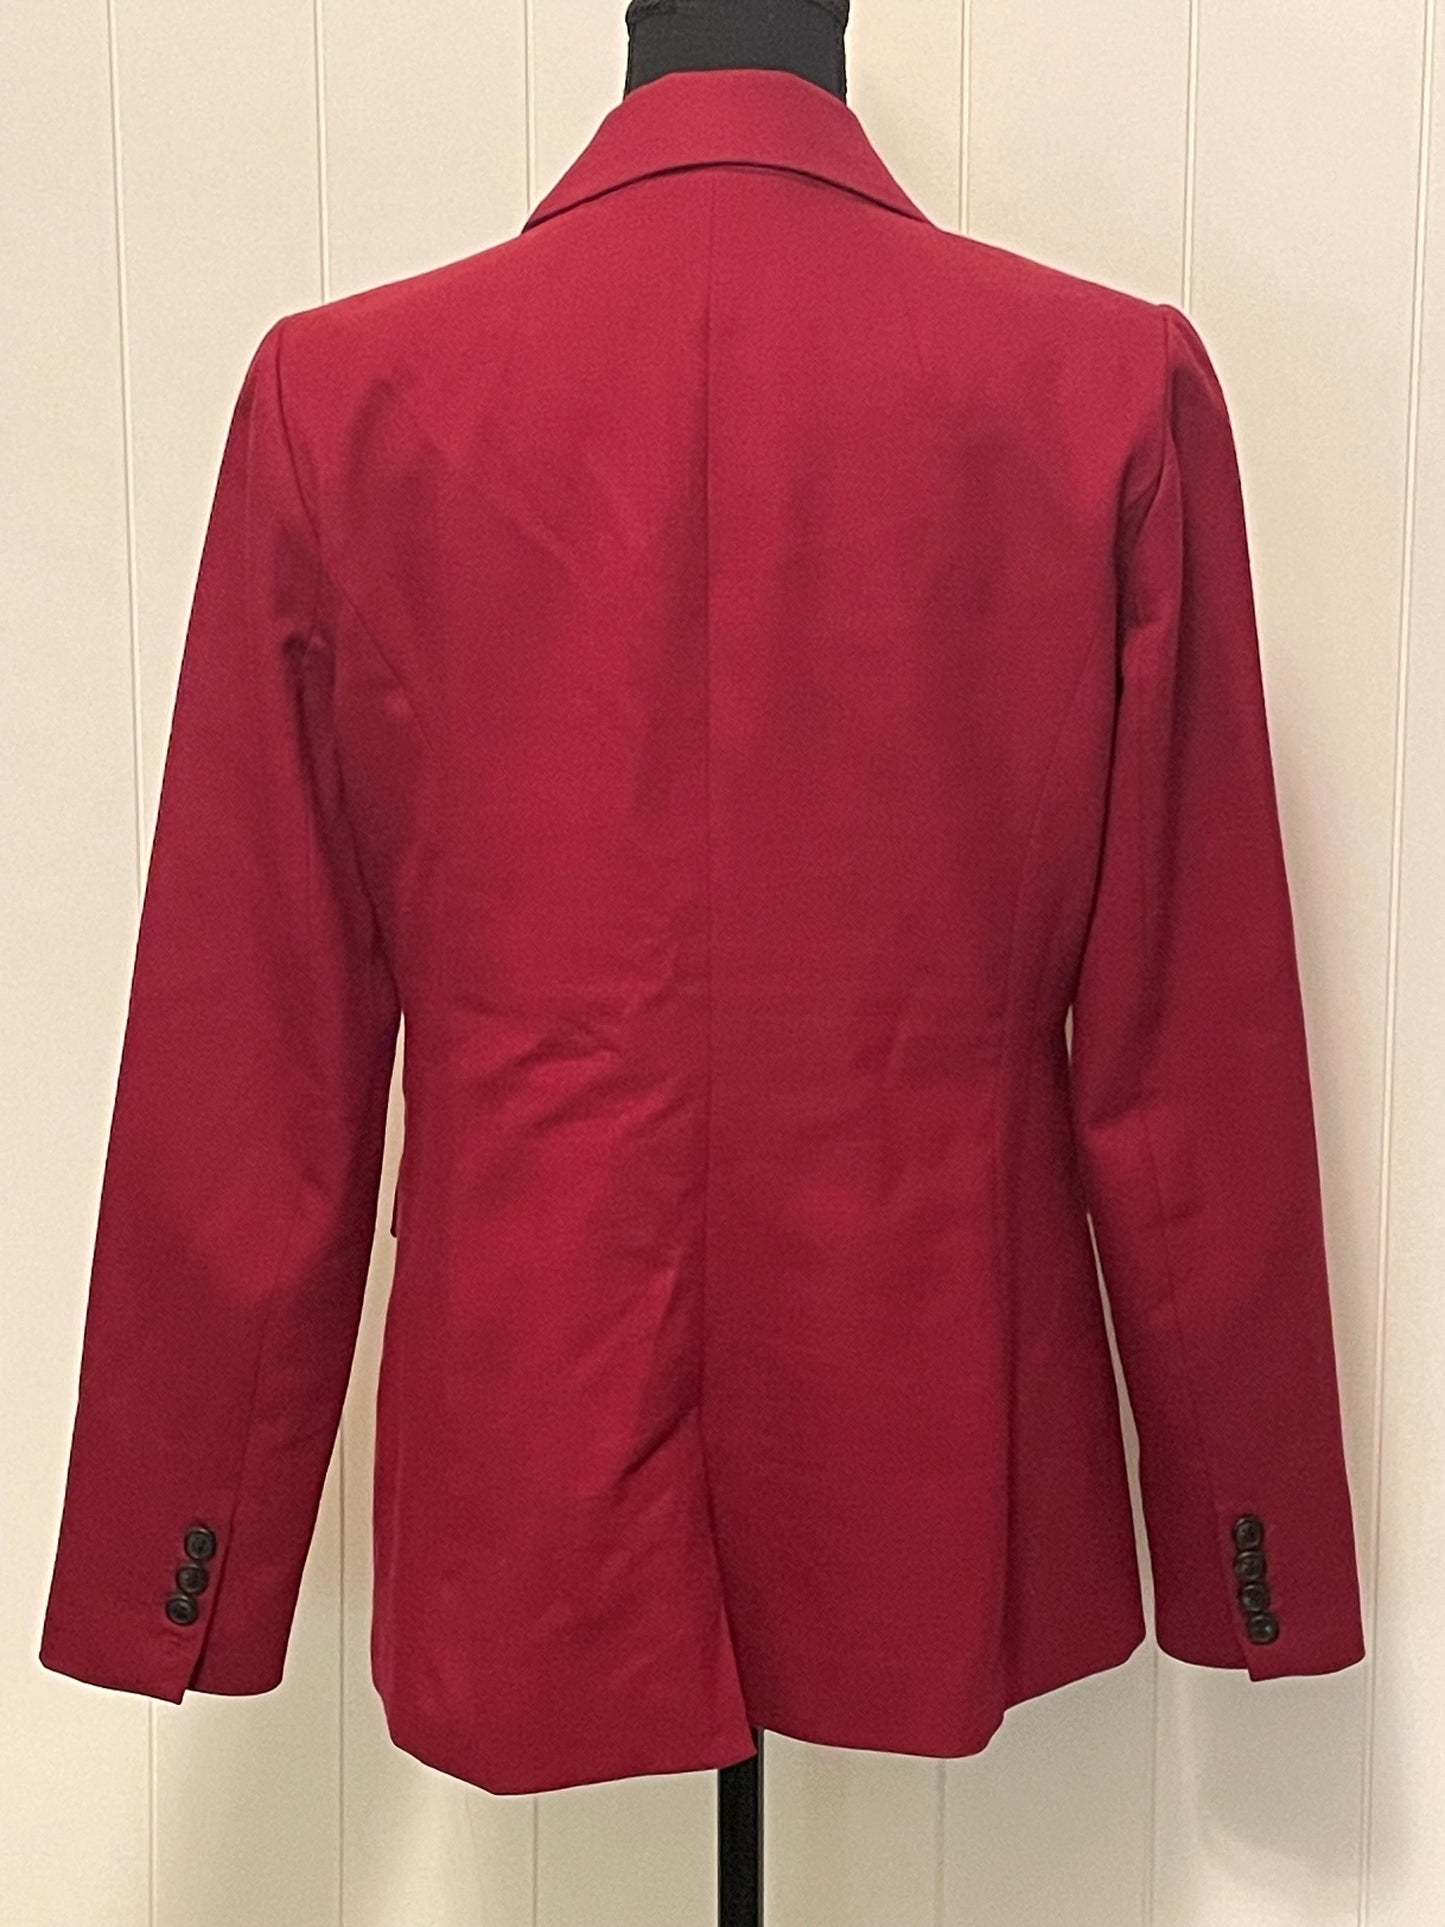 Size 10 - Red 1901 blazer